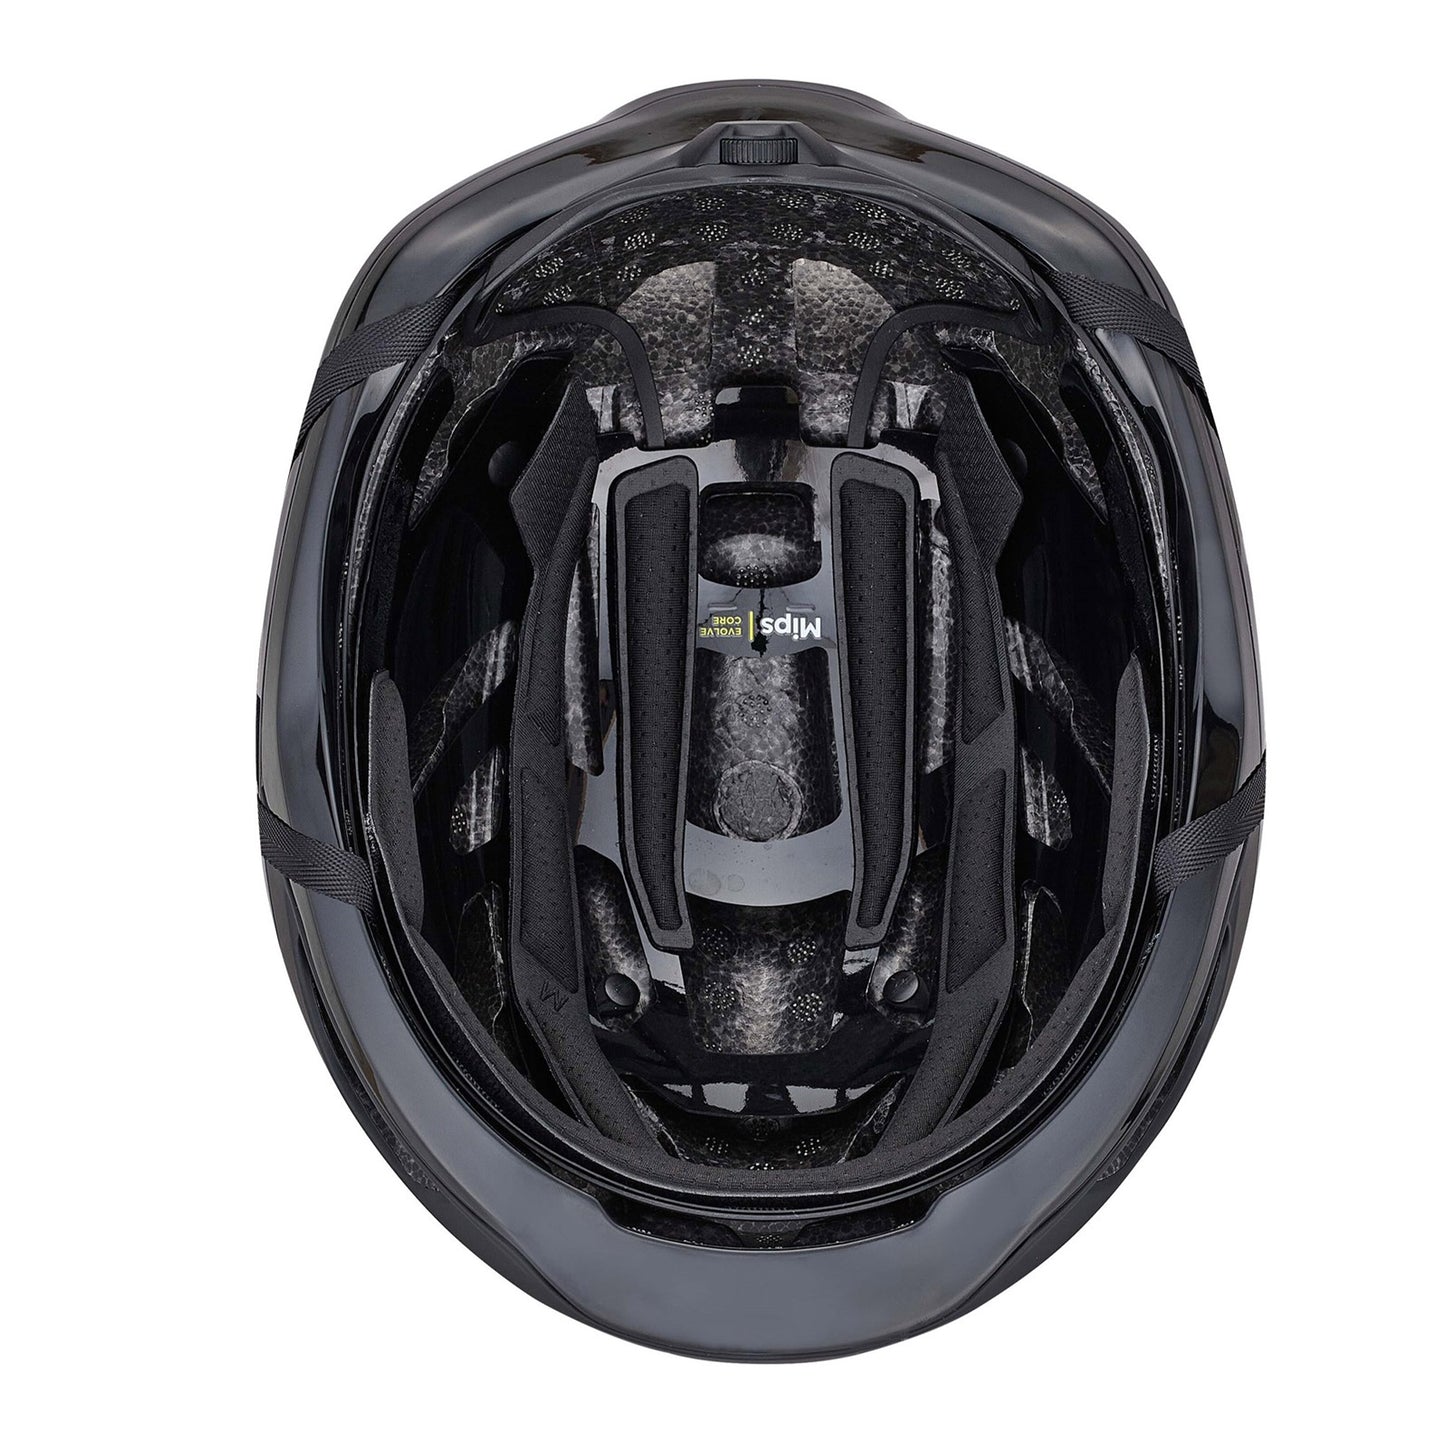 Specialized Propero 4 Unisex Road Helmet, Black